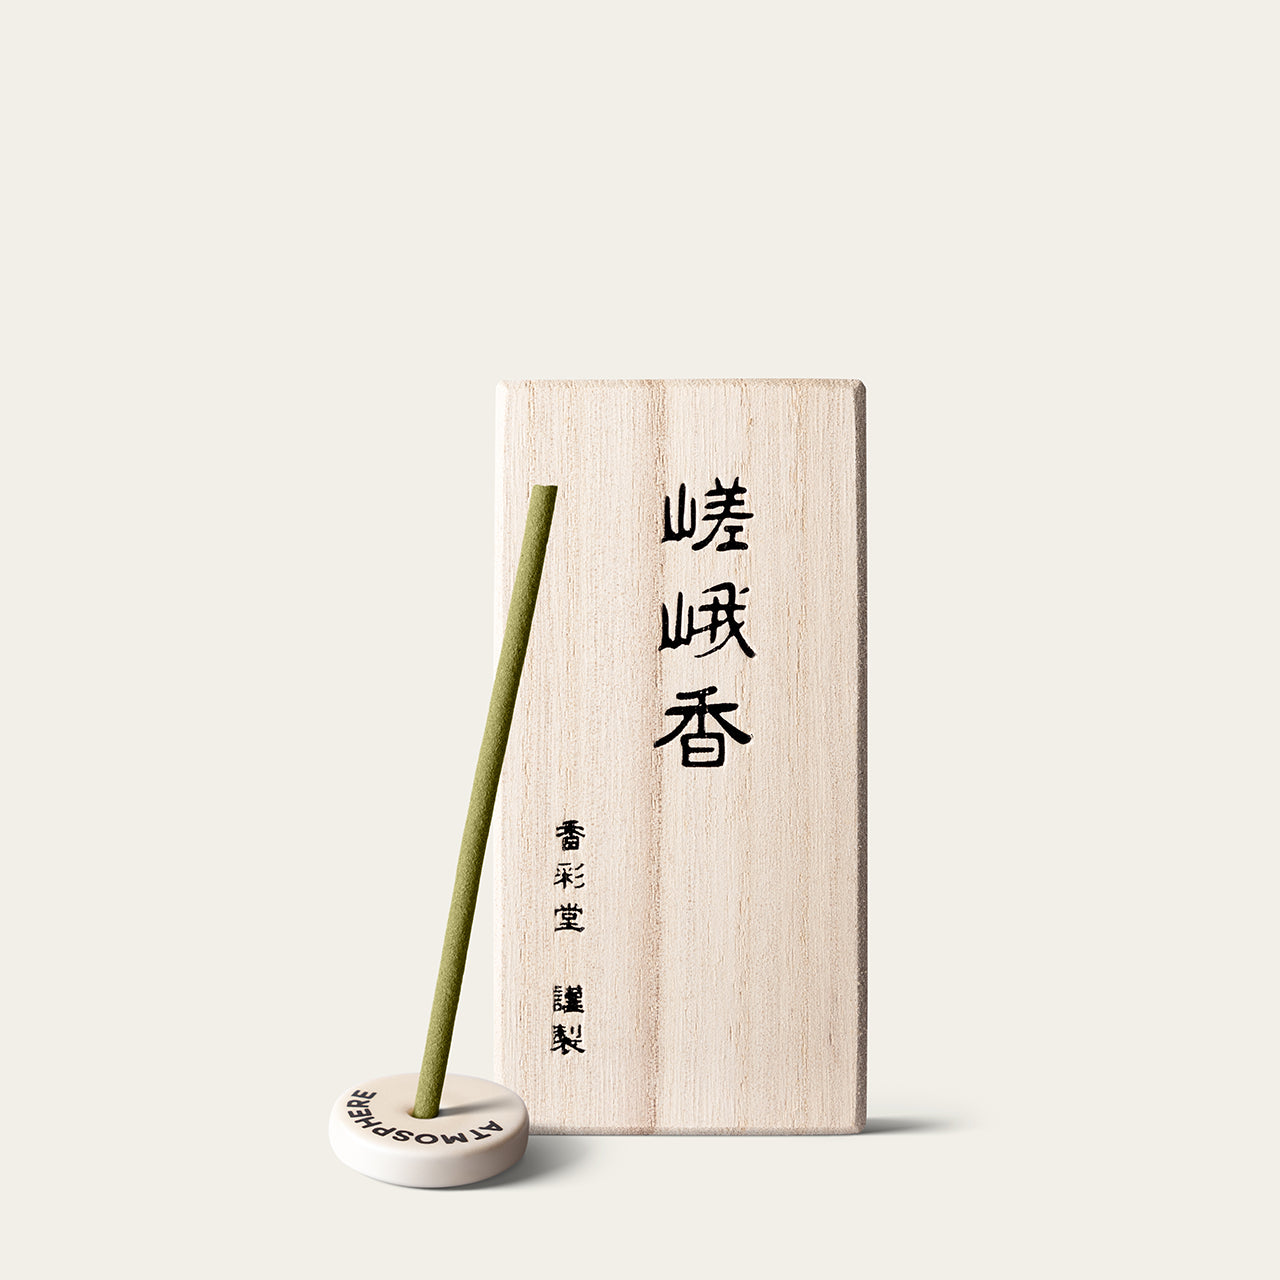 Kousaido Scenic Charm Veiled Dawn of Saga Japanese incense sticks (30 sticks) with Atmosphere ceramic incense holder